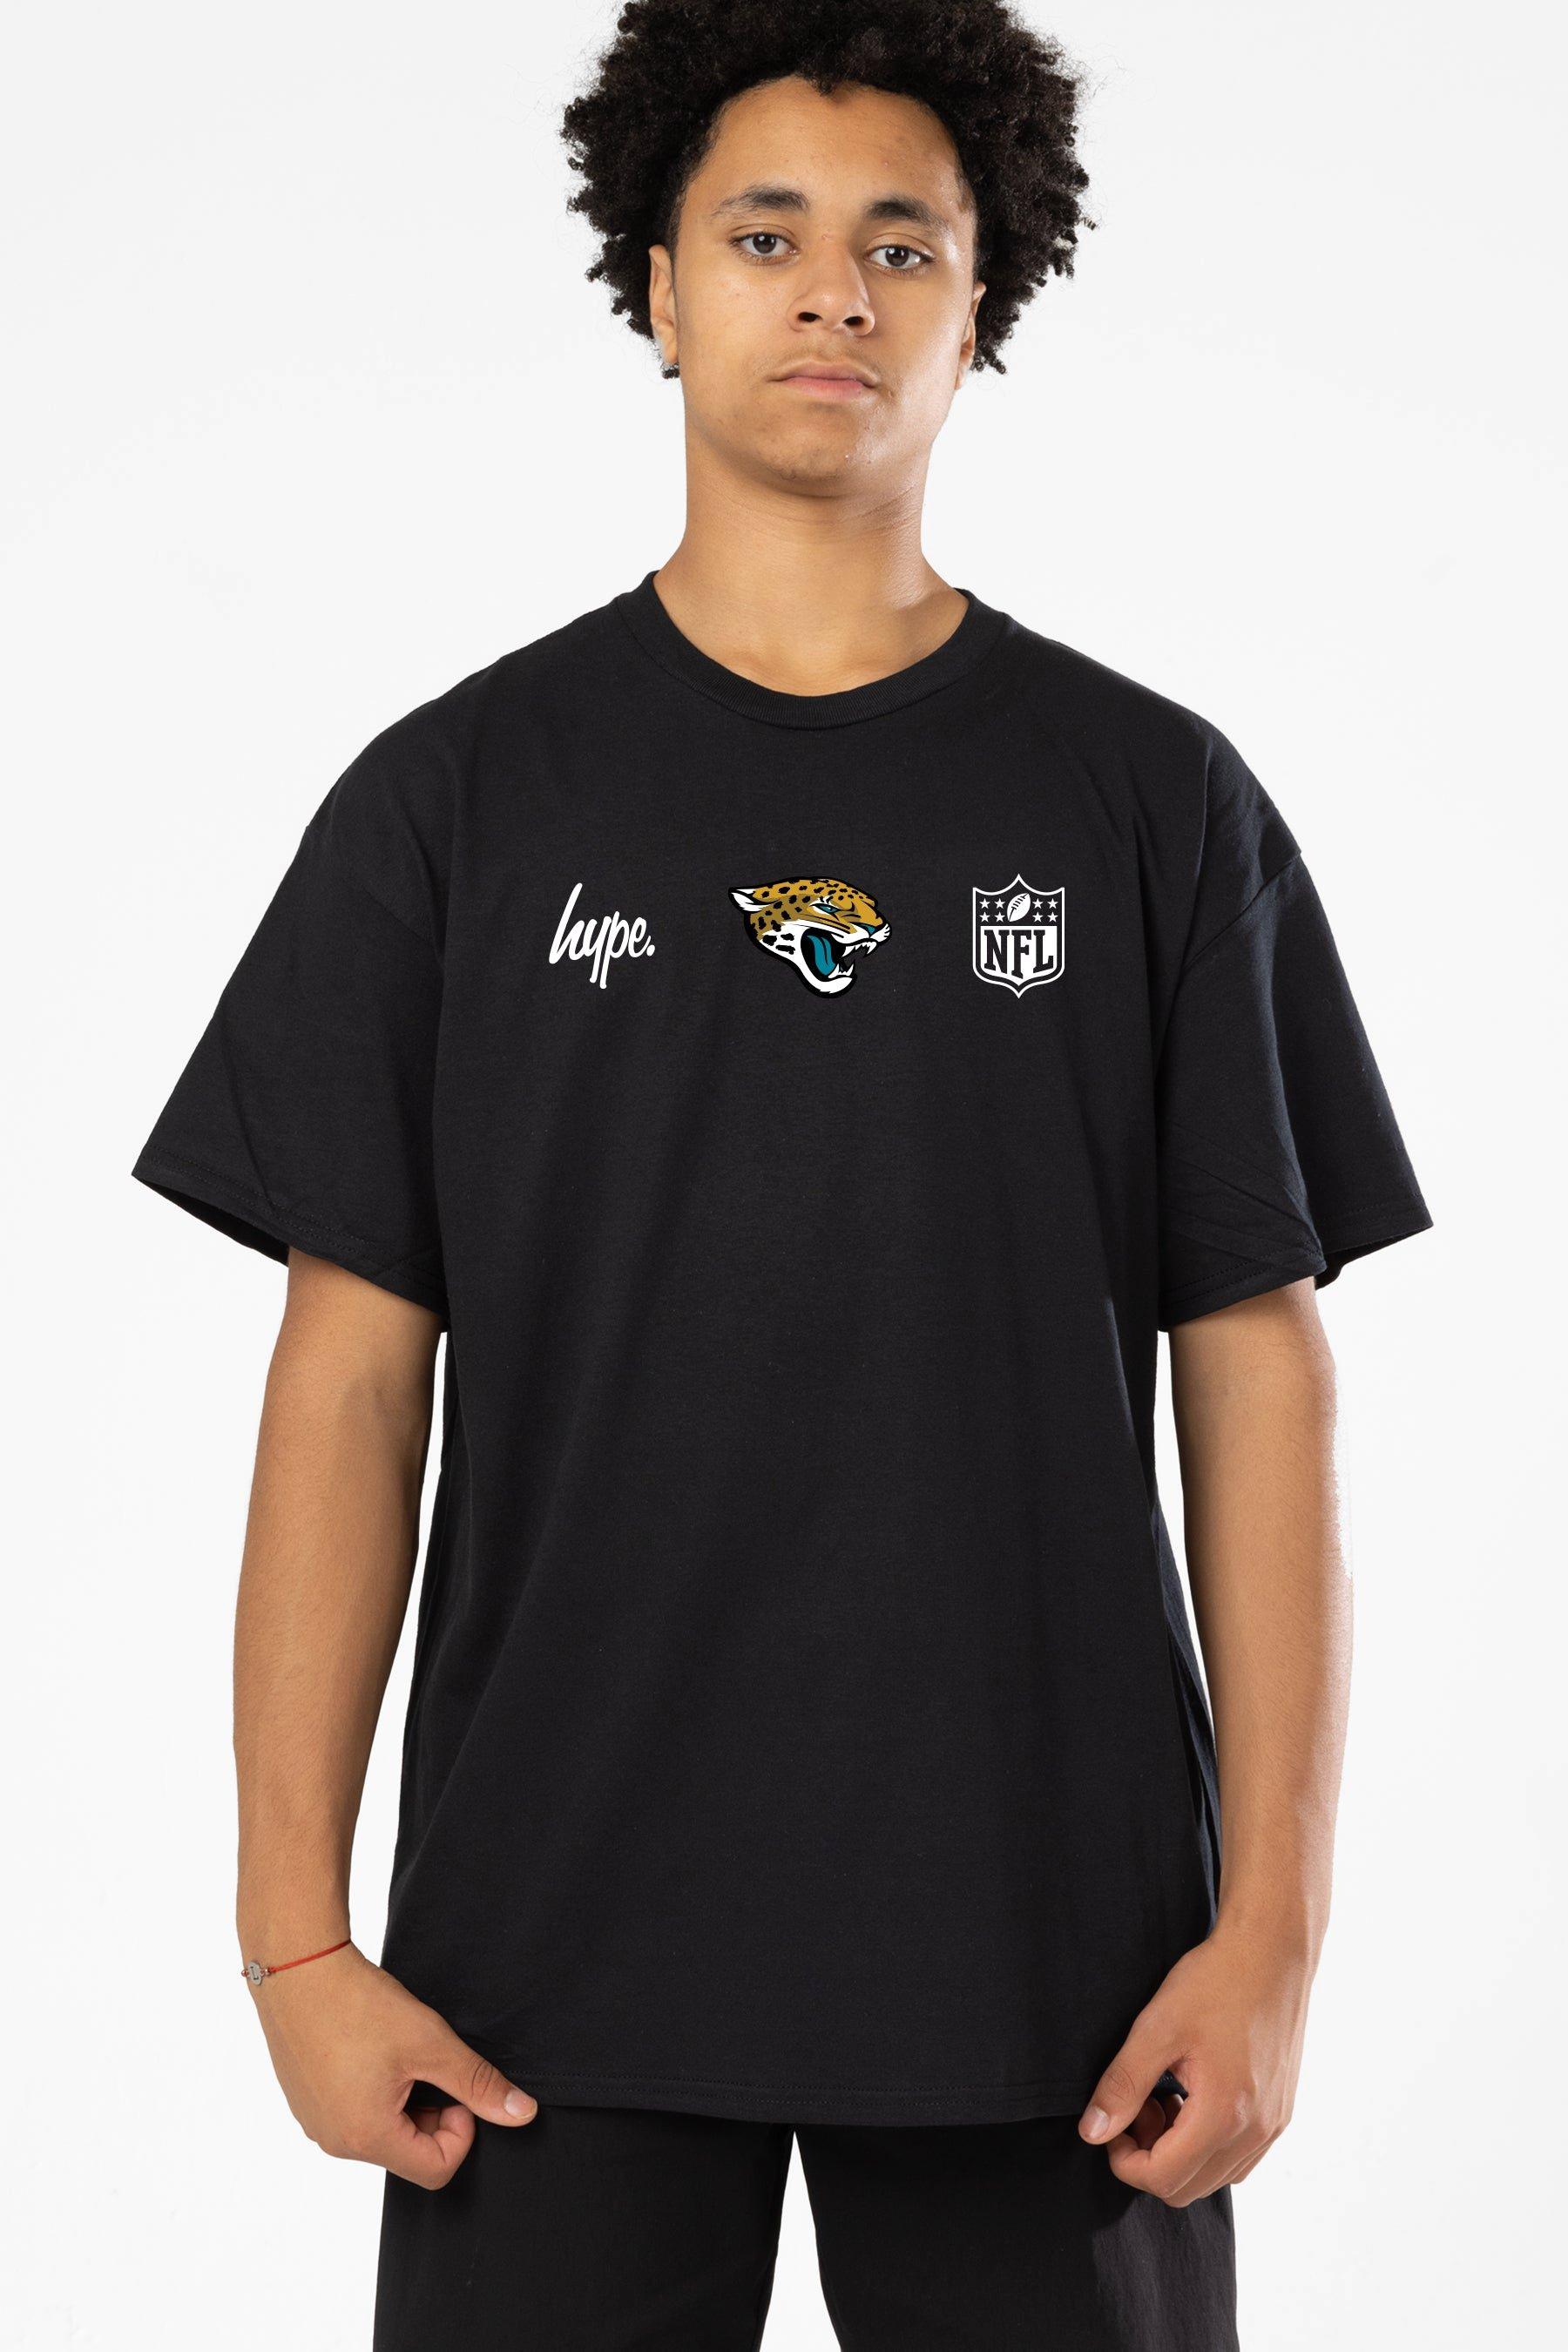 NFL X Jacksonville Jaguars T-Shirt